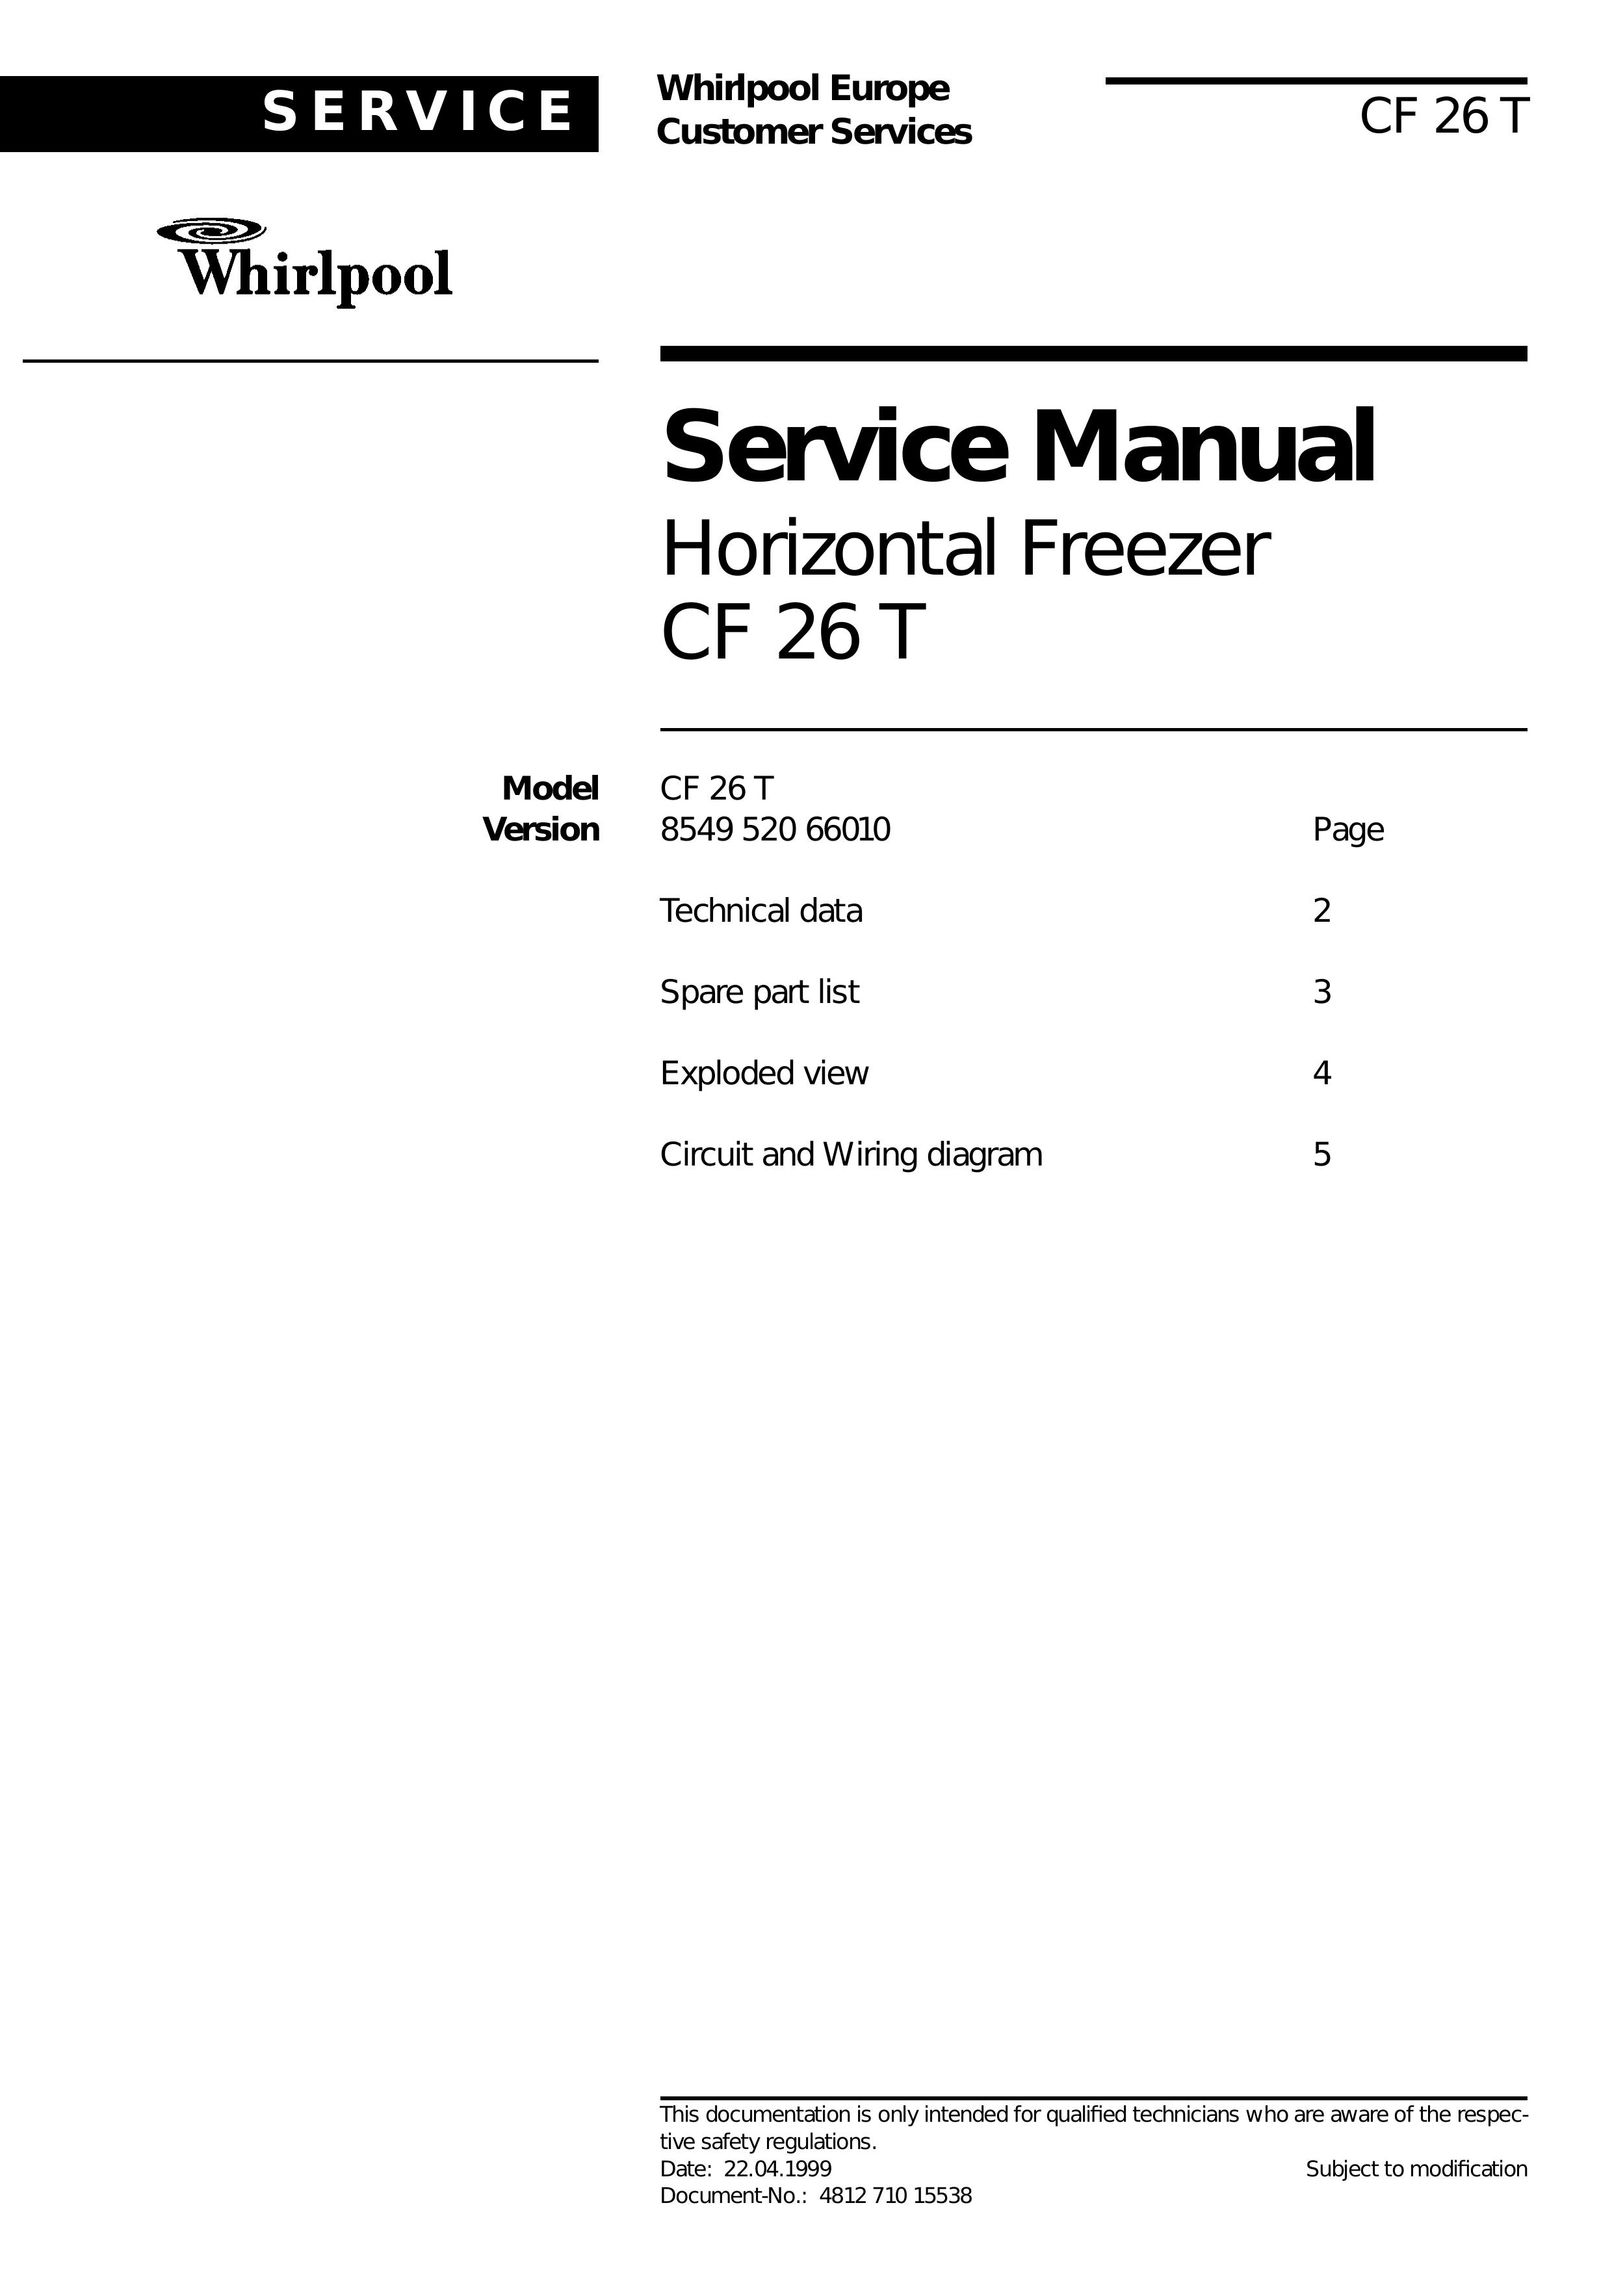 Whirlpool CF 26 T Freezer User Manual